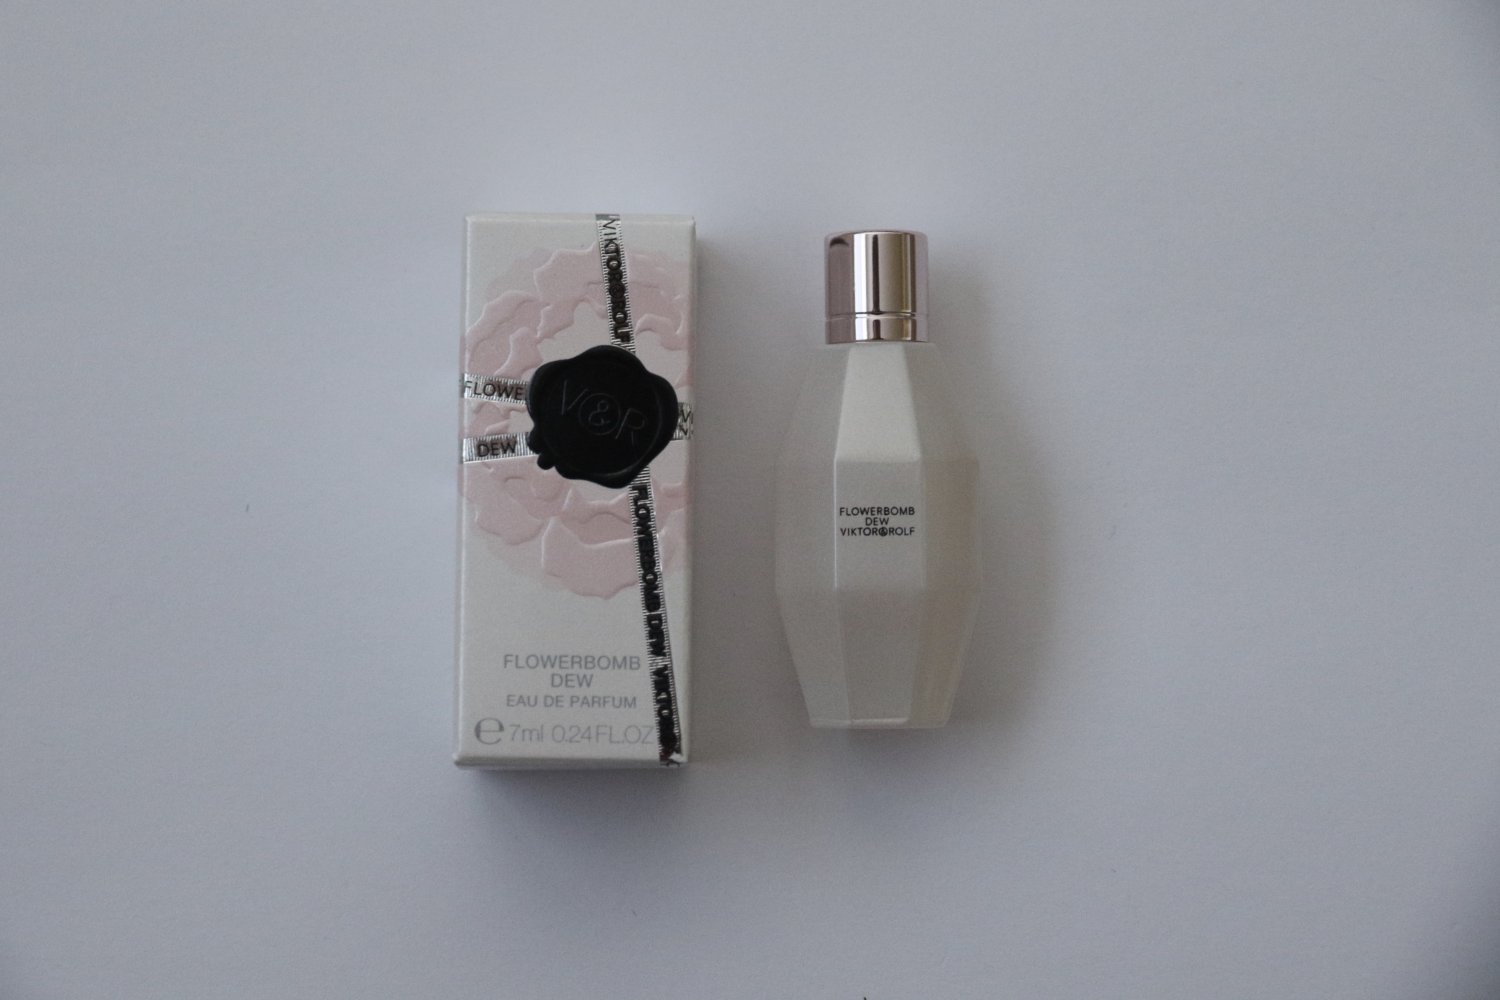 Viktor & Rolf Flowerbomb Dew Mini Perfume Eau de Parfum .24 fl oz 7 ml EDP New